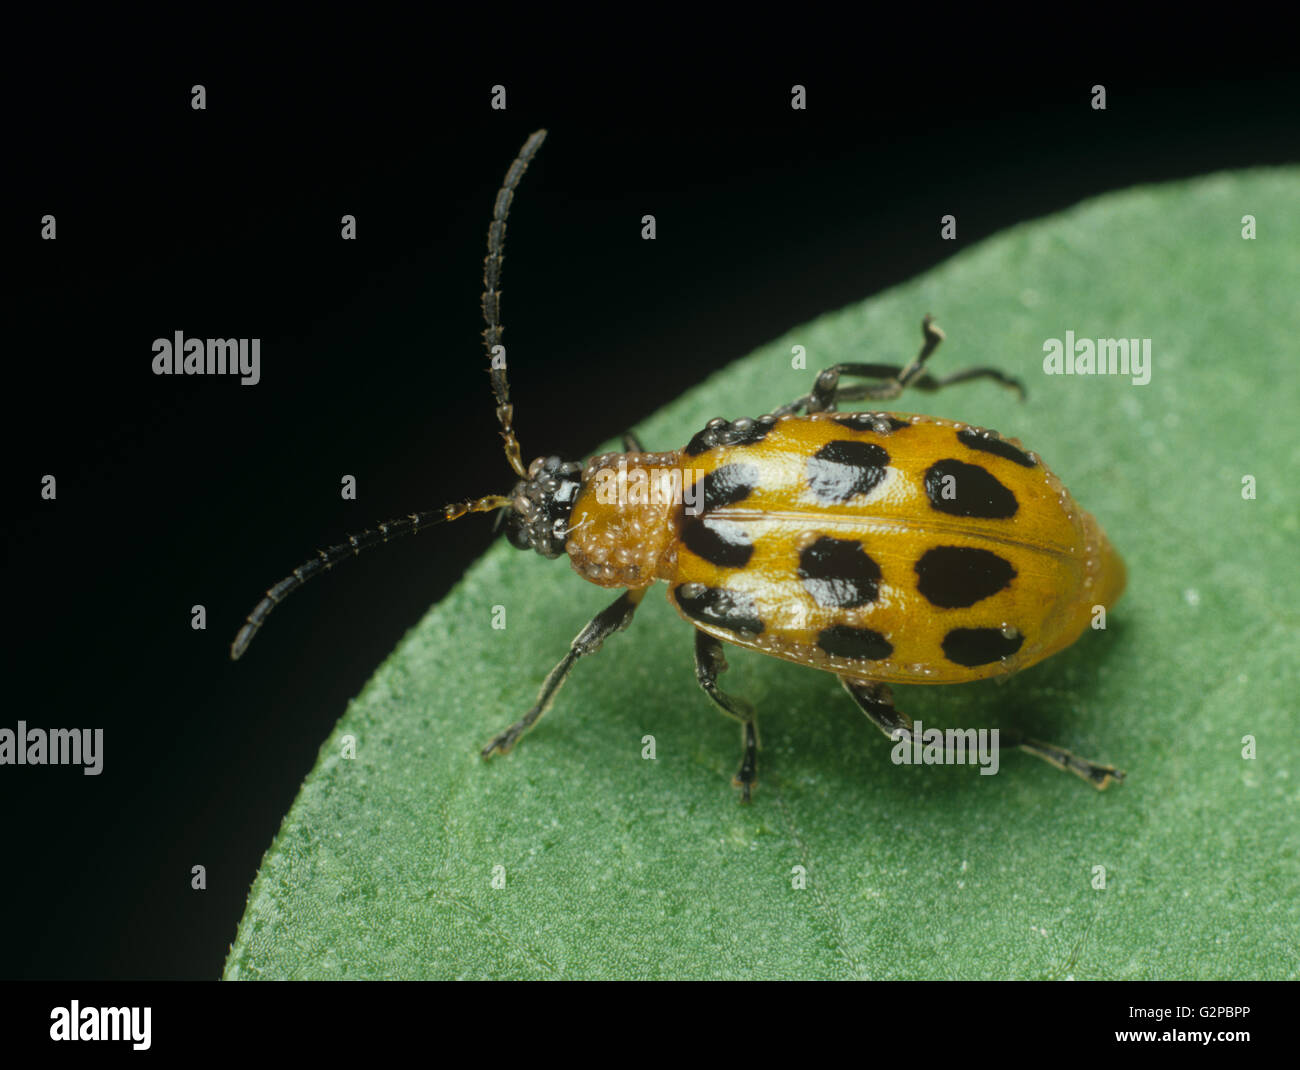 Spotted cucumber beetle, Diabrotica undecimpunctata, adult with phoretic mites Stock Photo